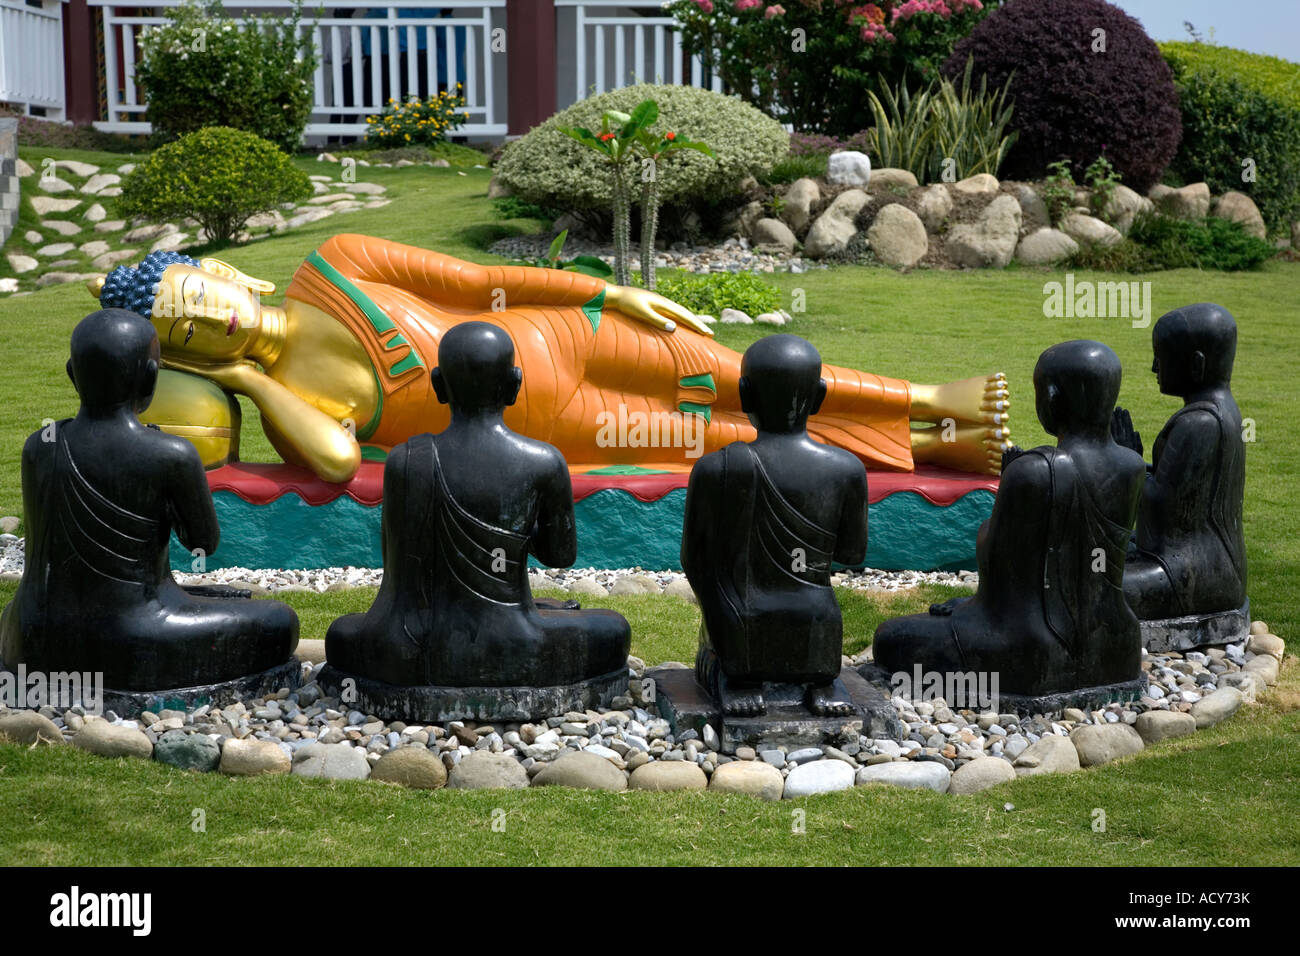 Lord Buddha and disciples sculptures. German Buddhist monastery. Lumbini. Nepal Stock Photo